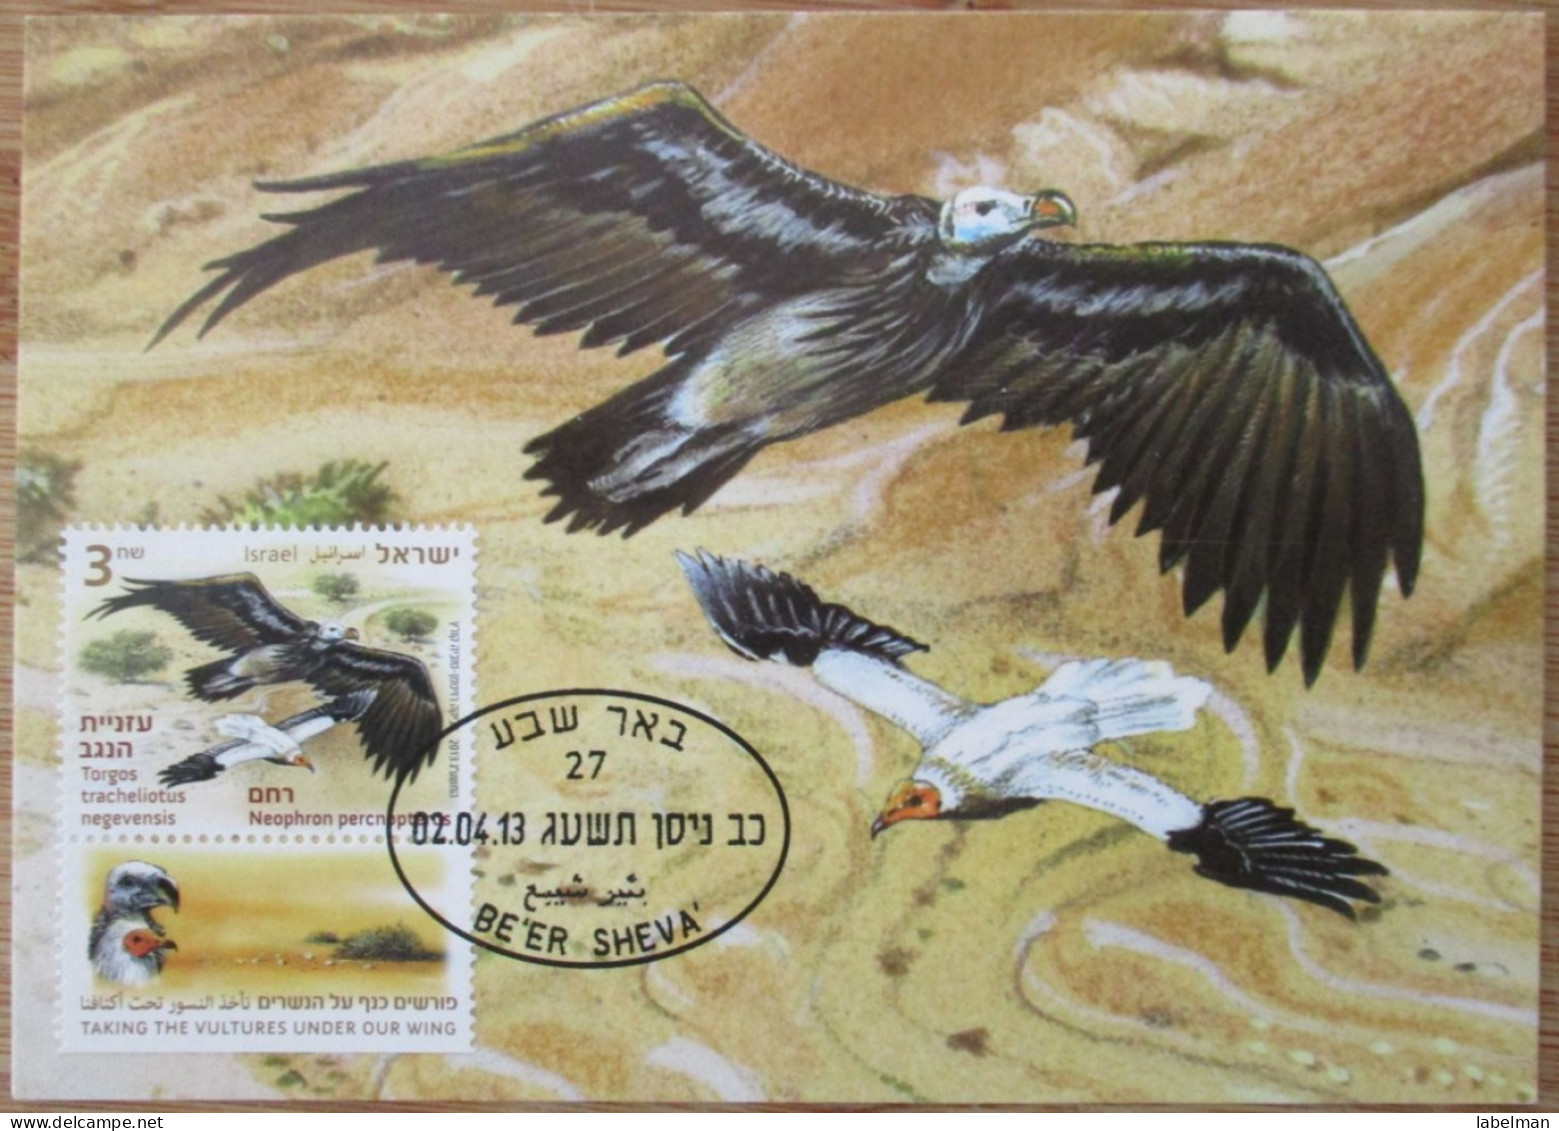 ISRAEL 2013 VULTURE GYPAETUS BARBATUS PALPHOT MAXIMUM CARD STAMP FIRST DAY OF ISSUE POSTCARD CARTE POSTALE POSTKARTE - Tarjetas – Máxima